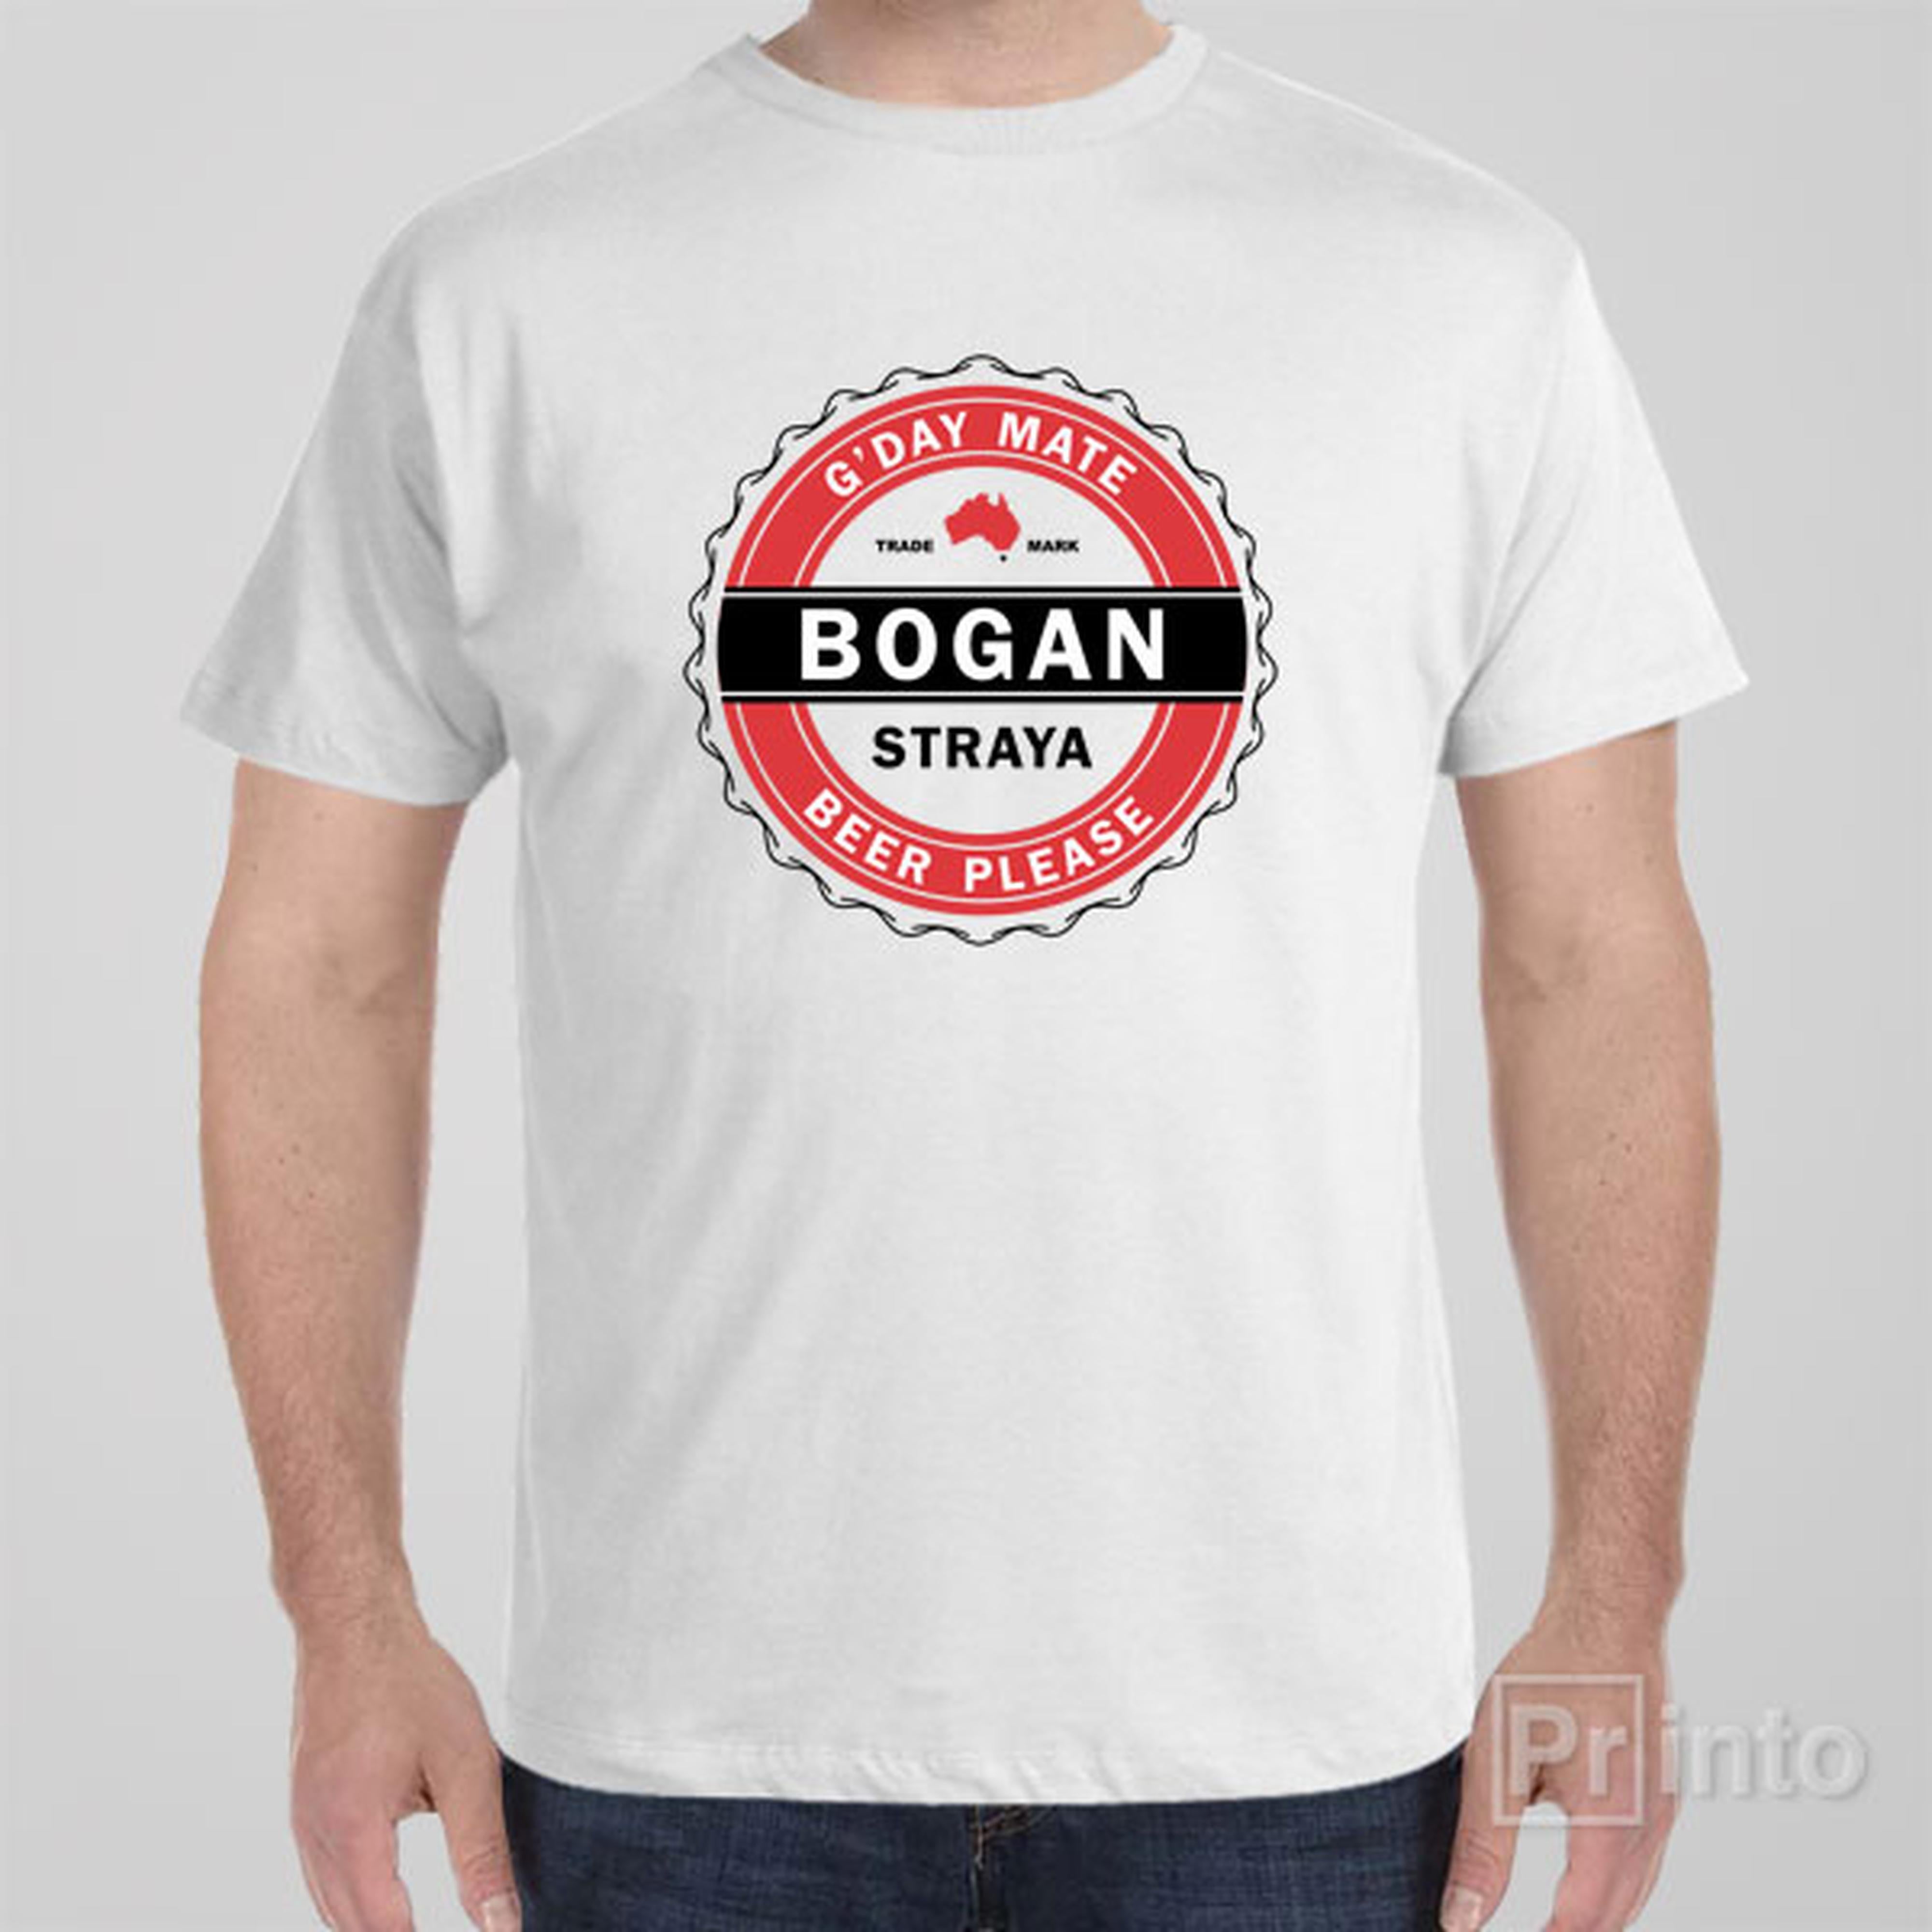 bogan-logo-t-shirt